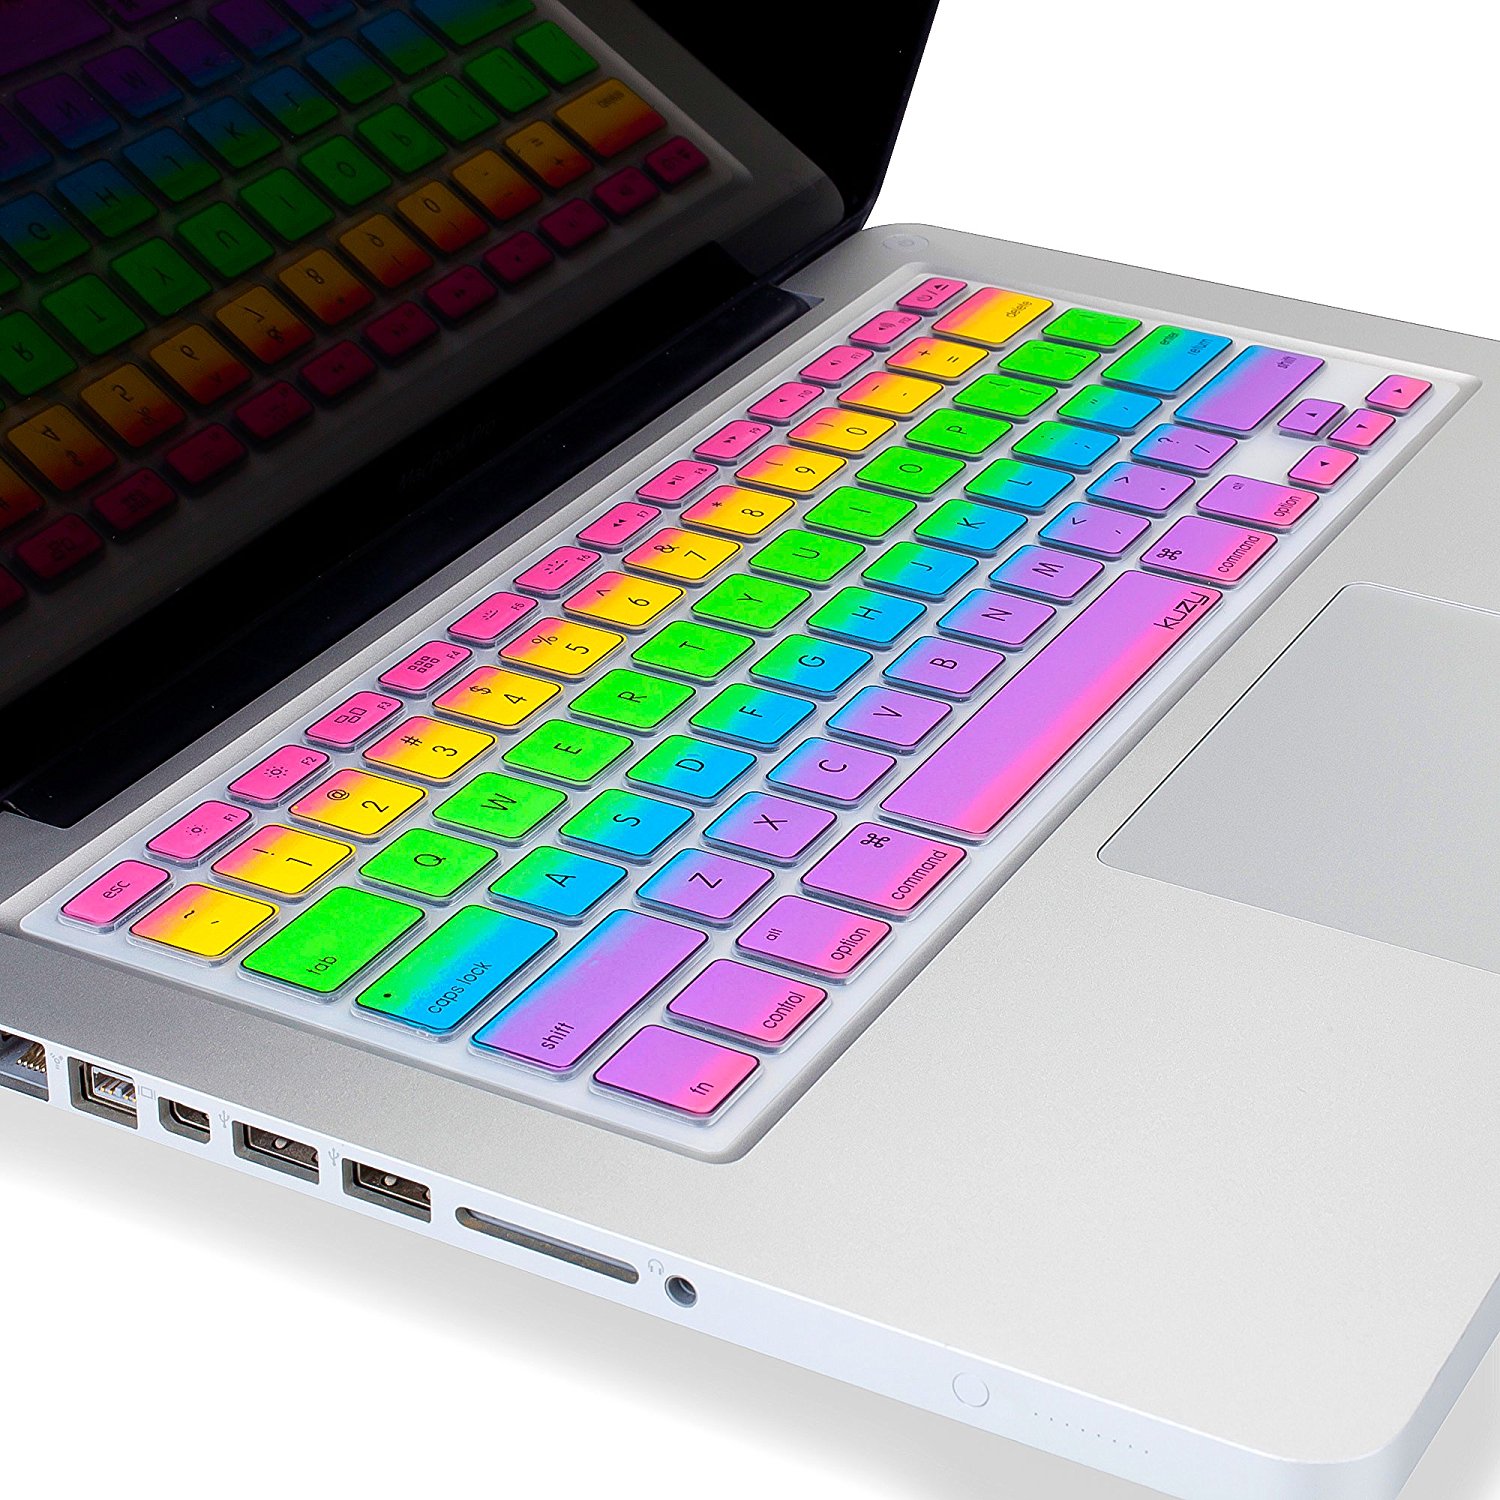 Amazon.com: Kuzy Rainbow Keyboard Cover Silicone Skin for MacBook ...